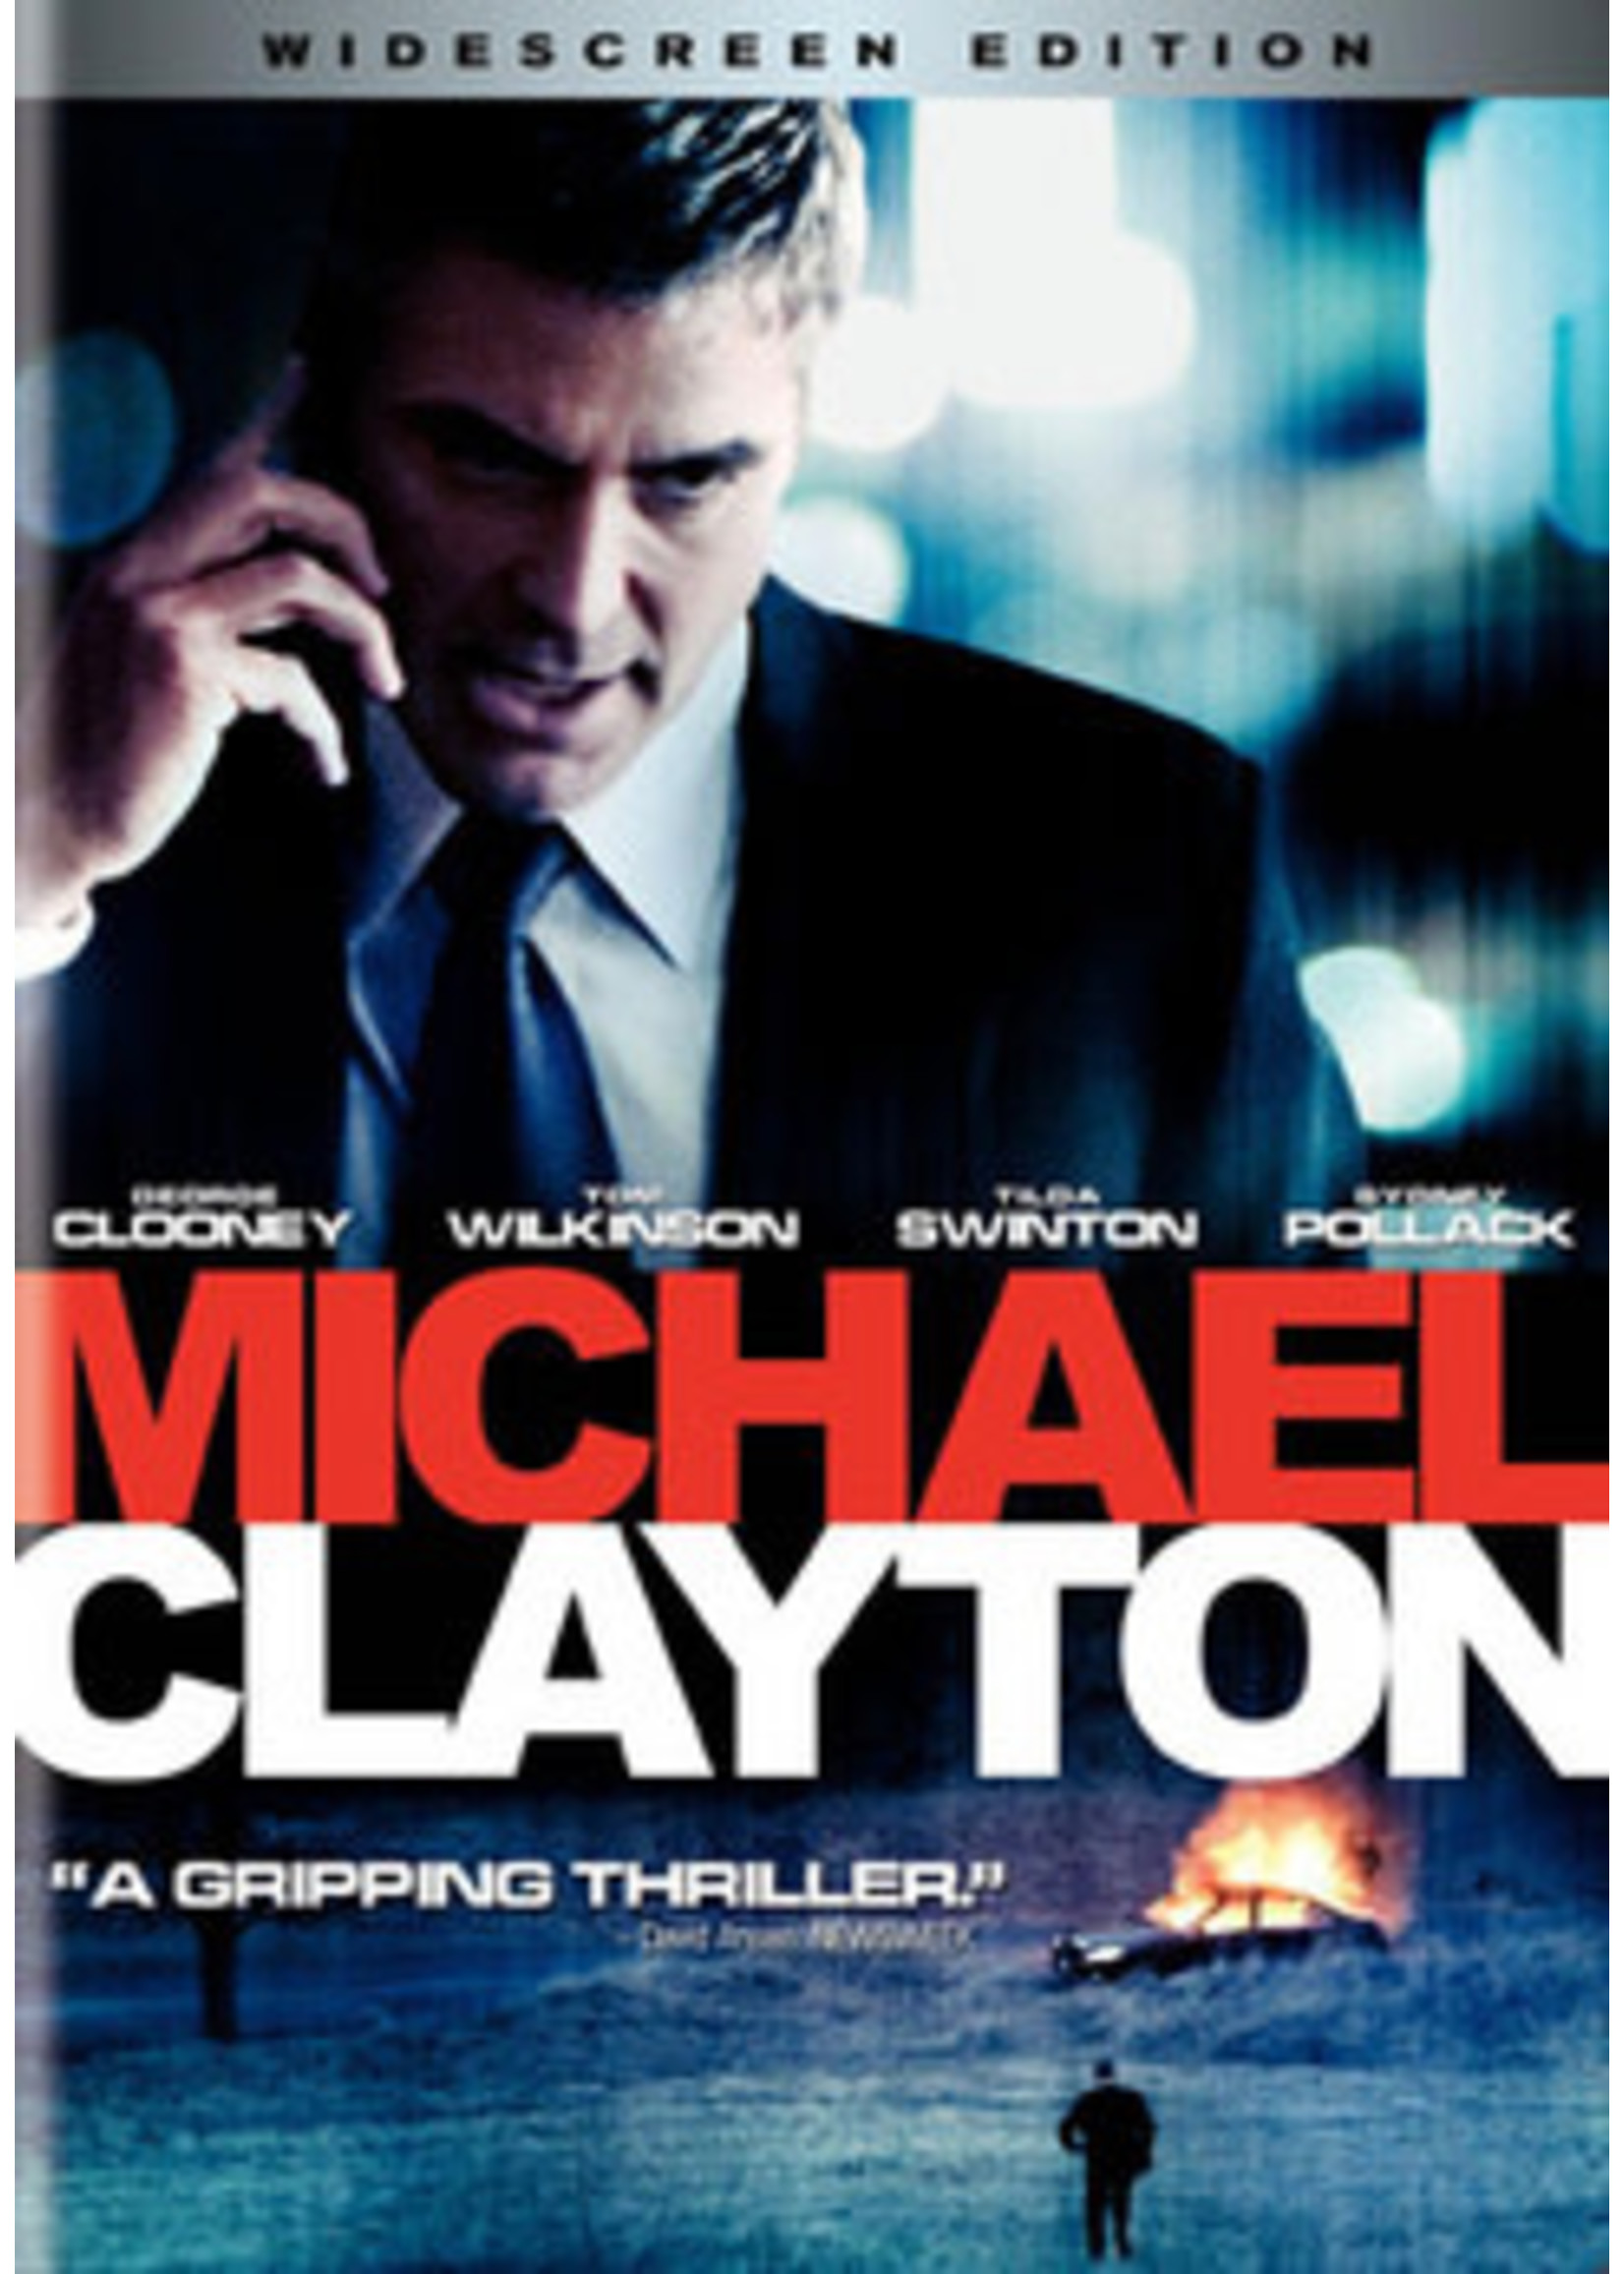 Michael Clayton (DVD)